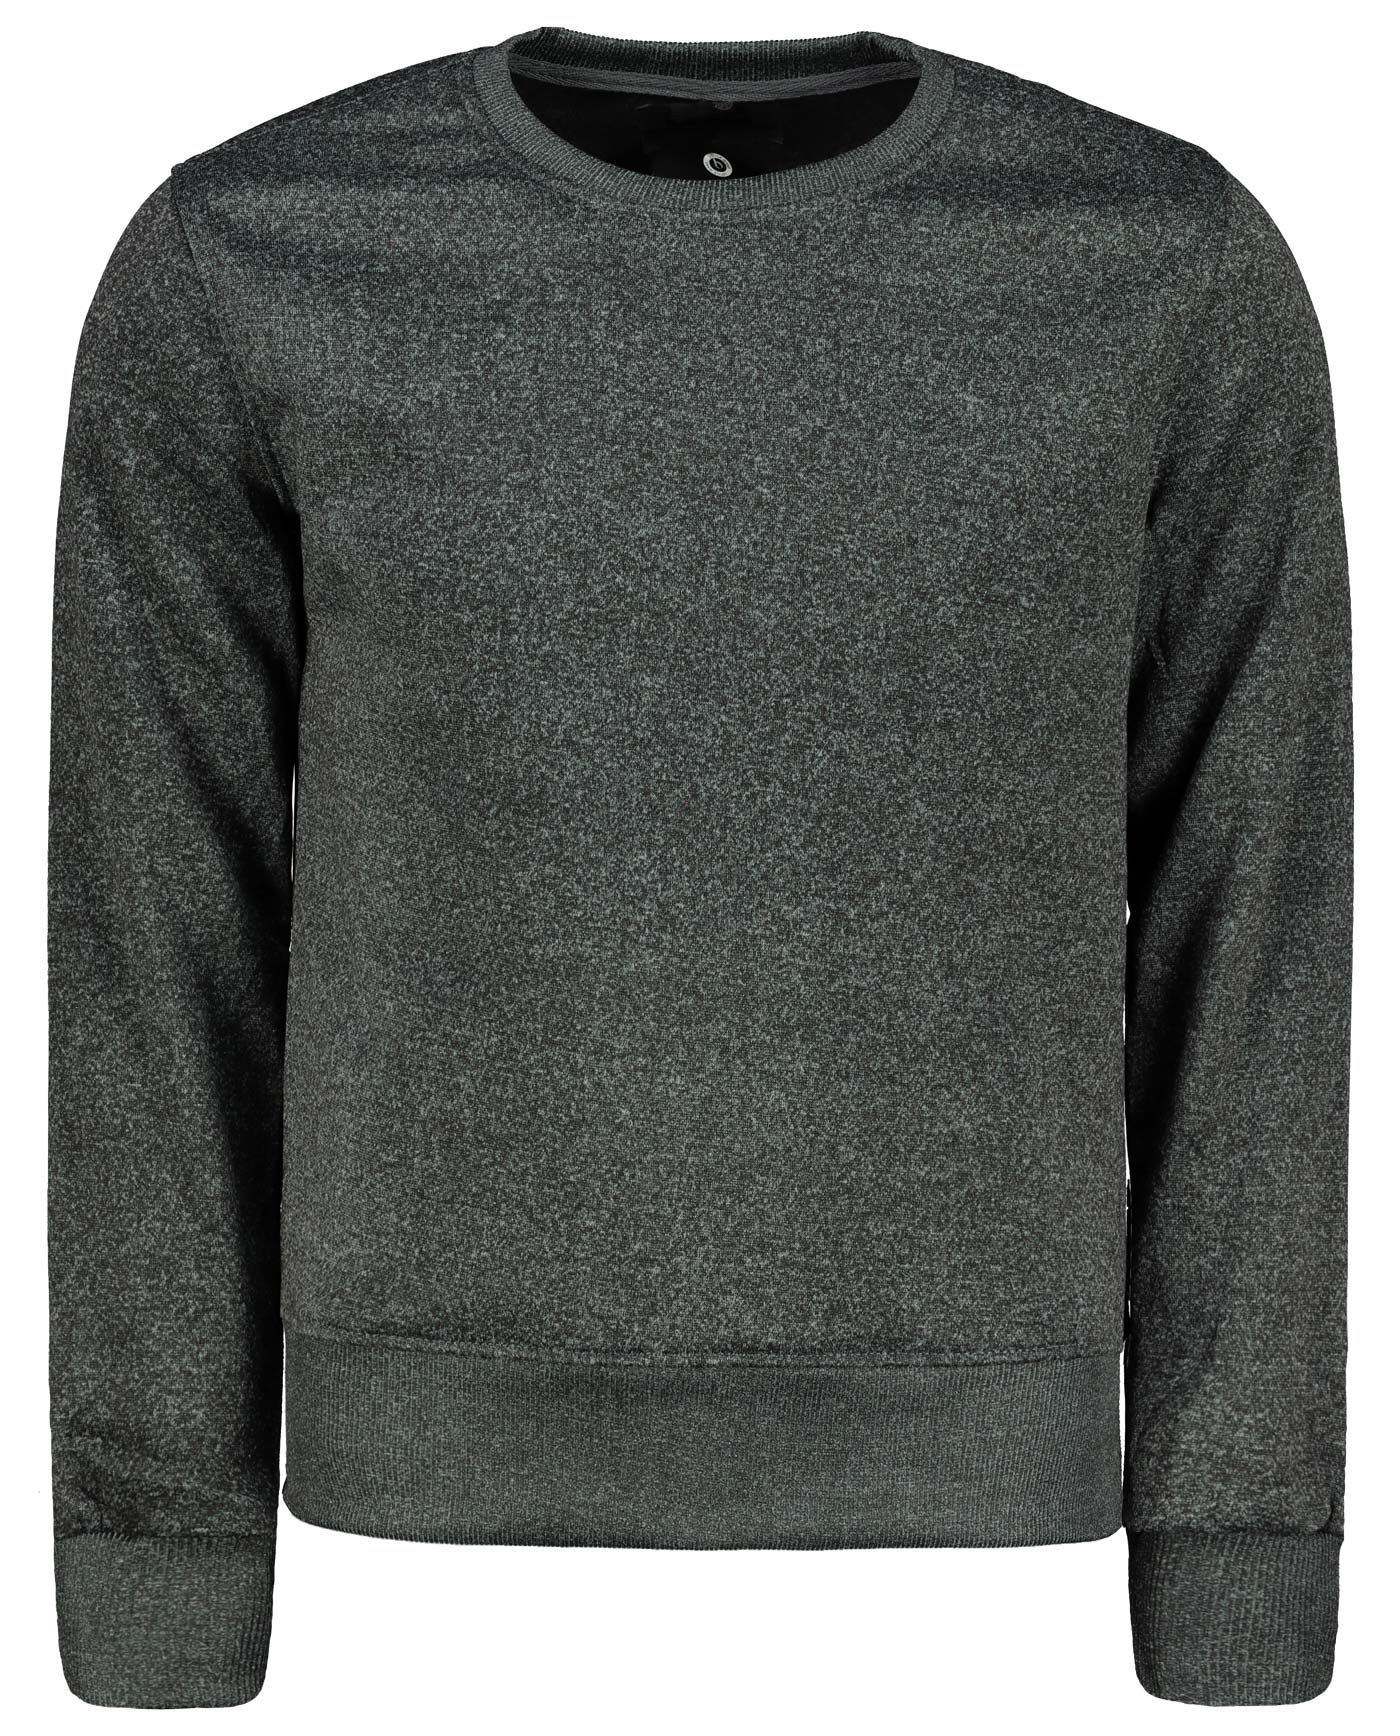 Men's hooded sweatshirt 2001-1 - black